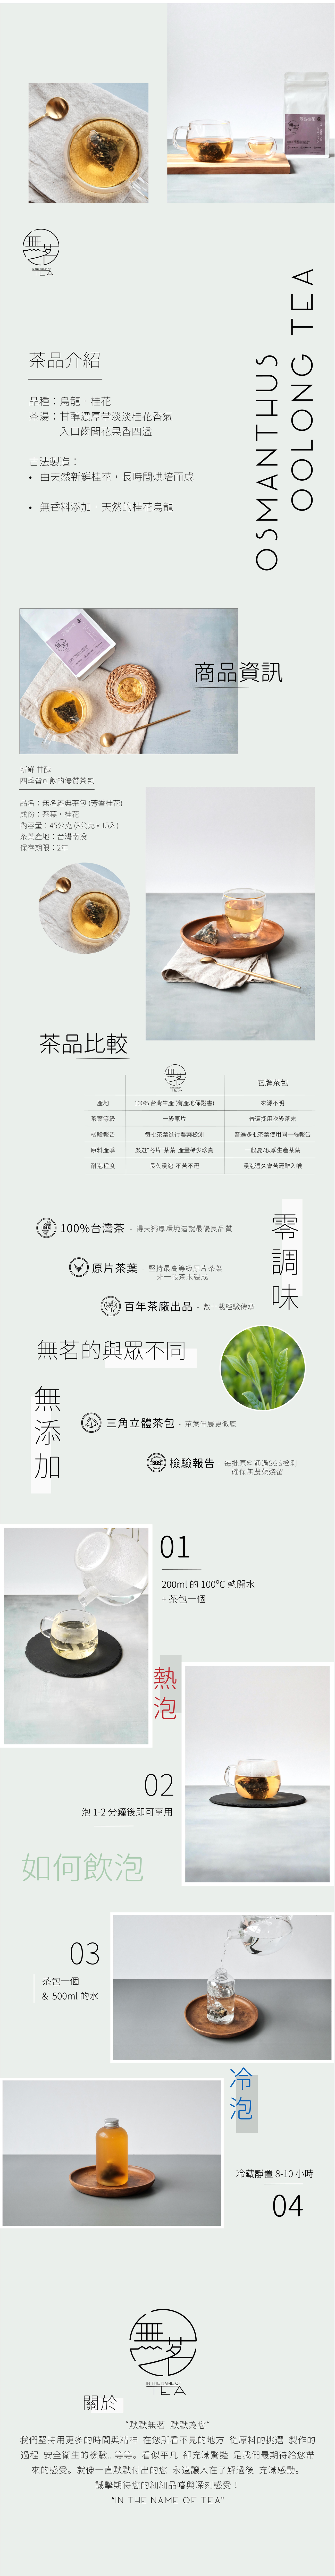 桂花烏龍 Website Tea Bag Description.jpg